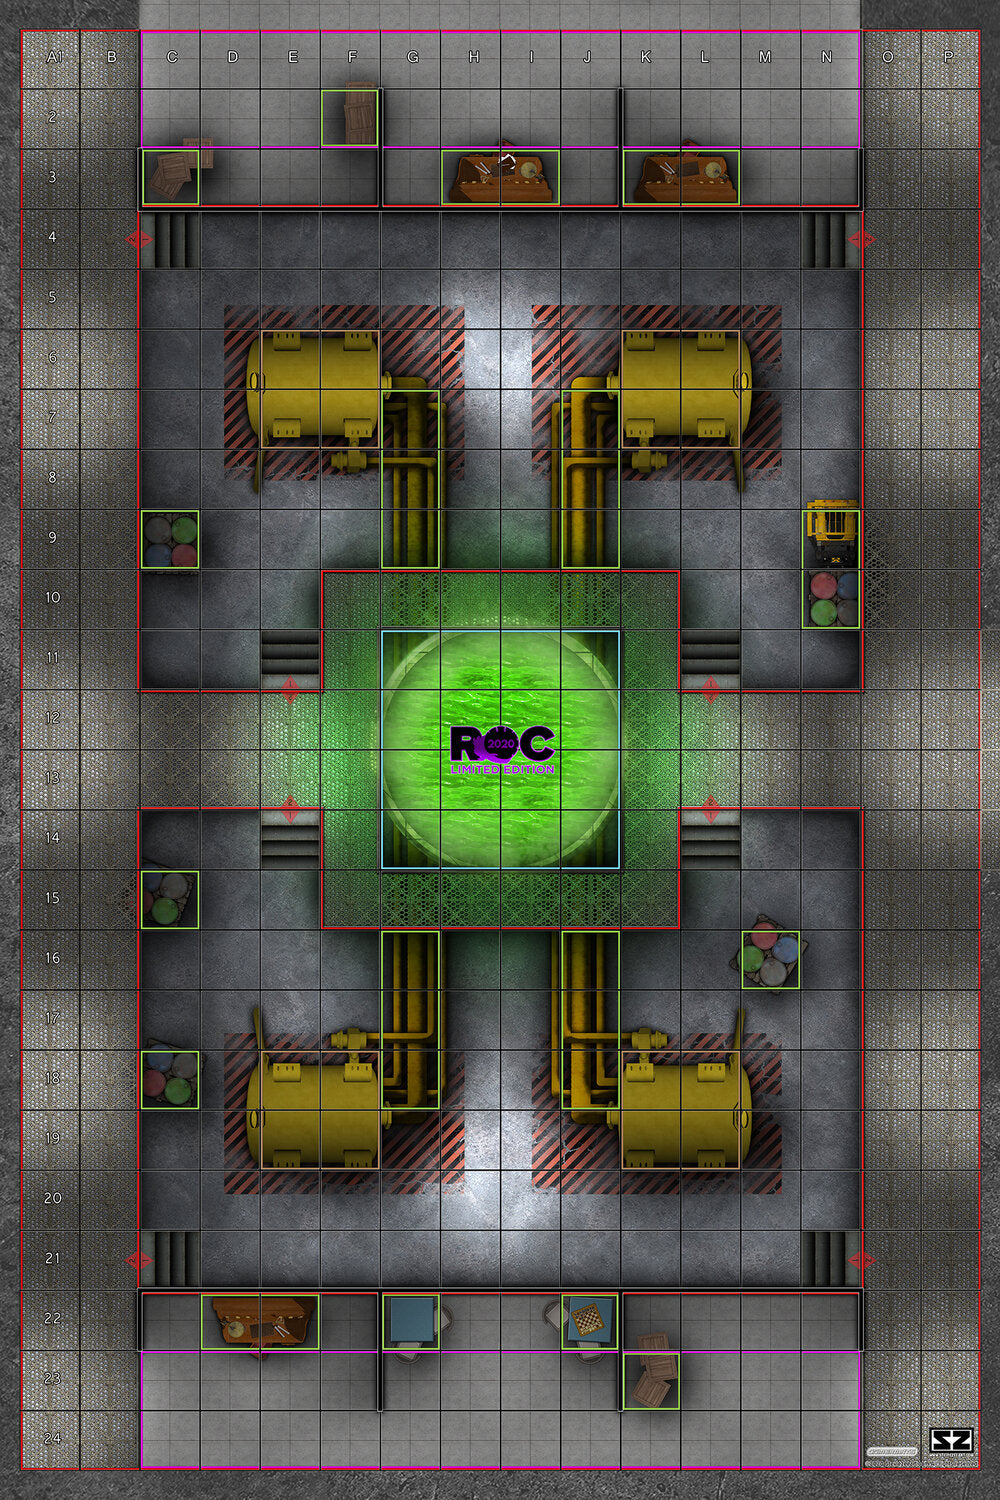 Chemical Plant Map D - ROC/HeroClix Mat Square Corners - 36" x 24" x 1/16"